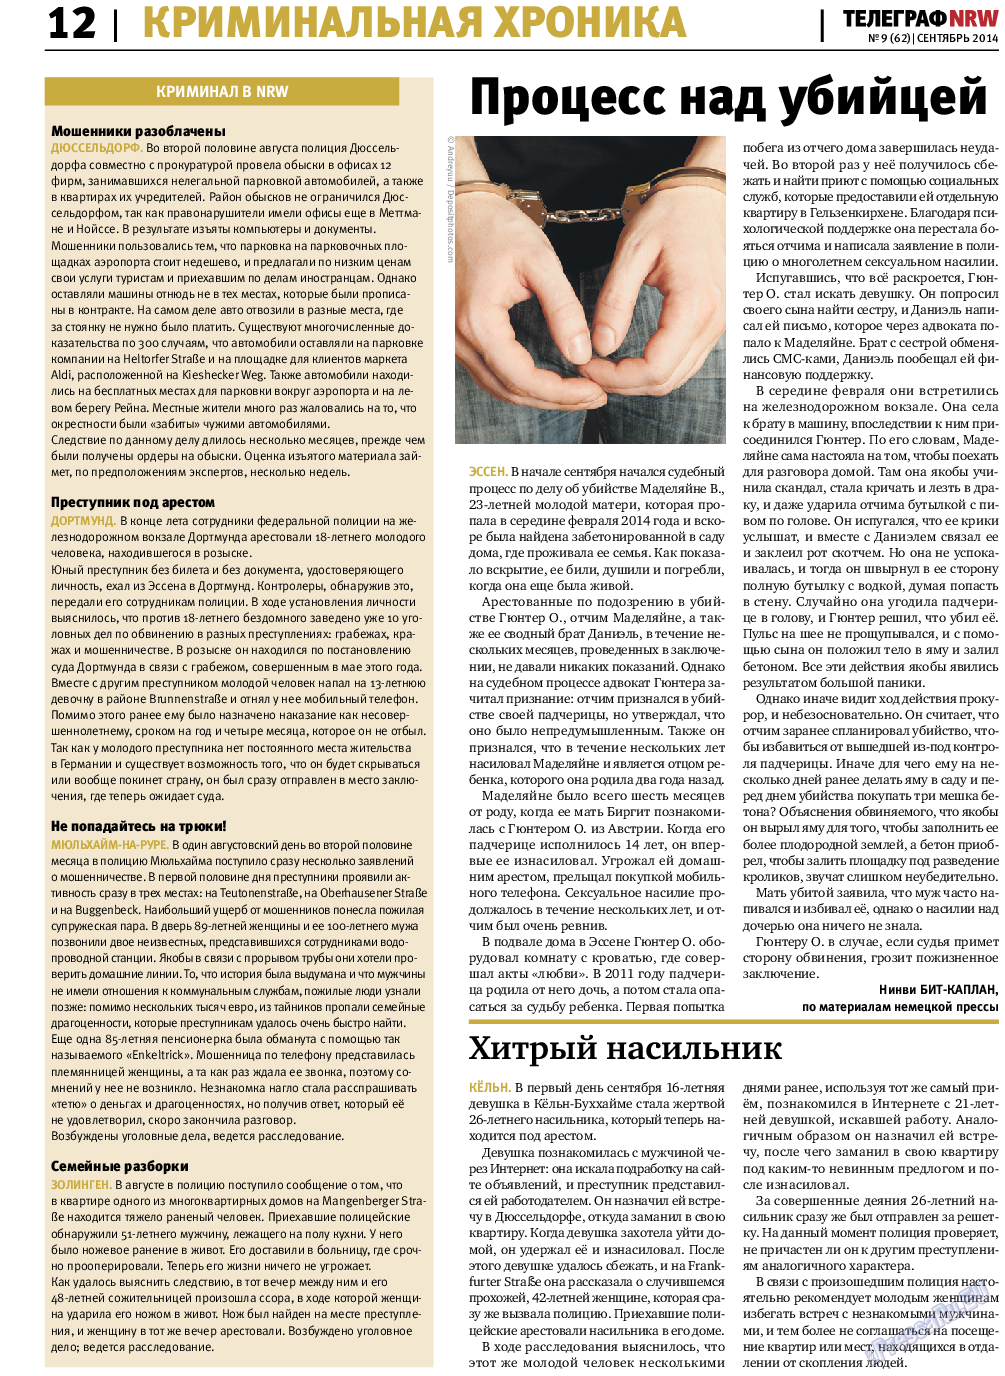 Телеграф NRW, газета. 2014 №9 стр.12